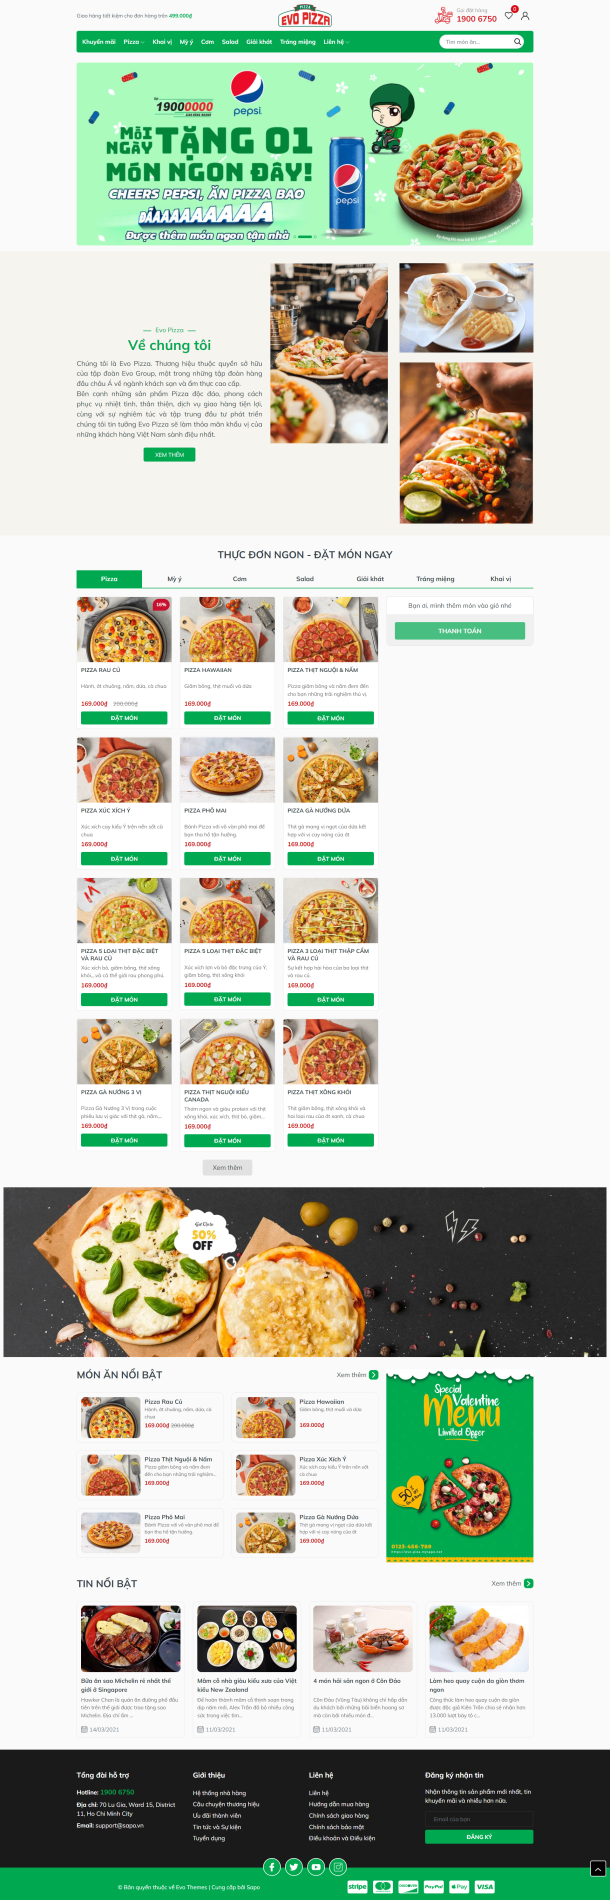 Mẫu website kinh doanh Cửa hàng Pizza 2